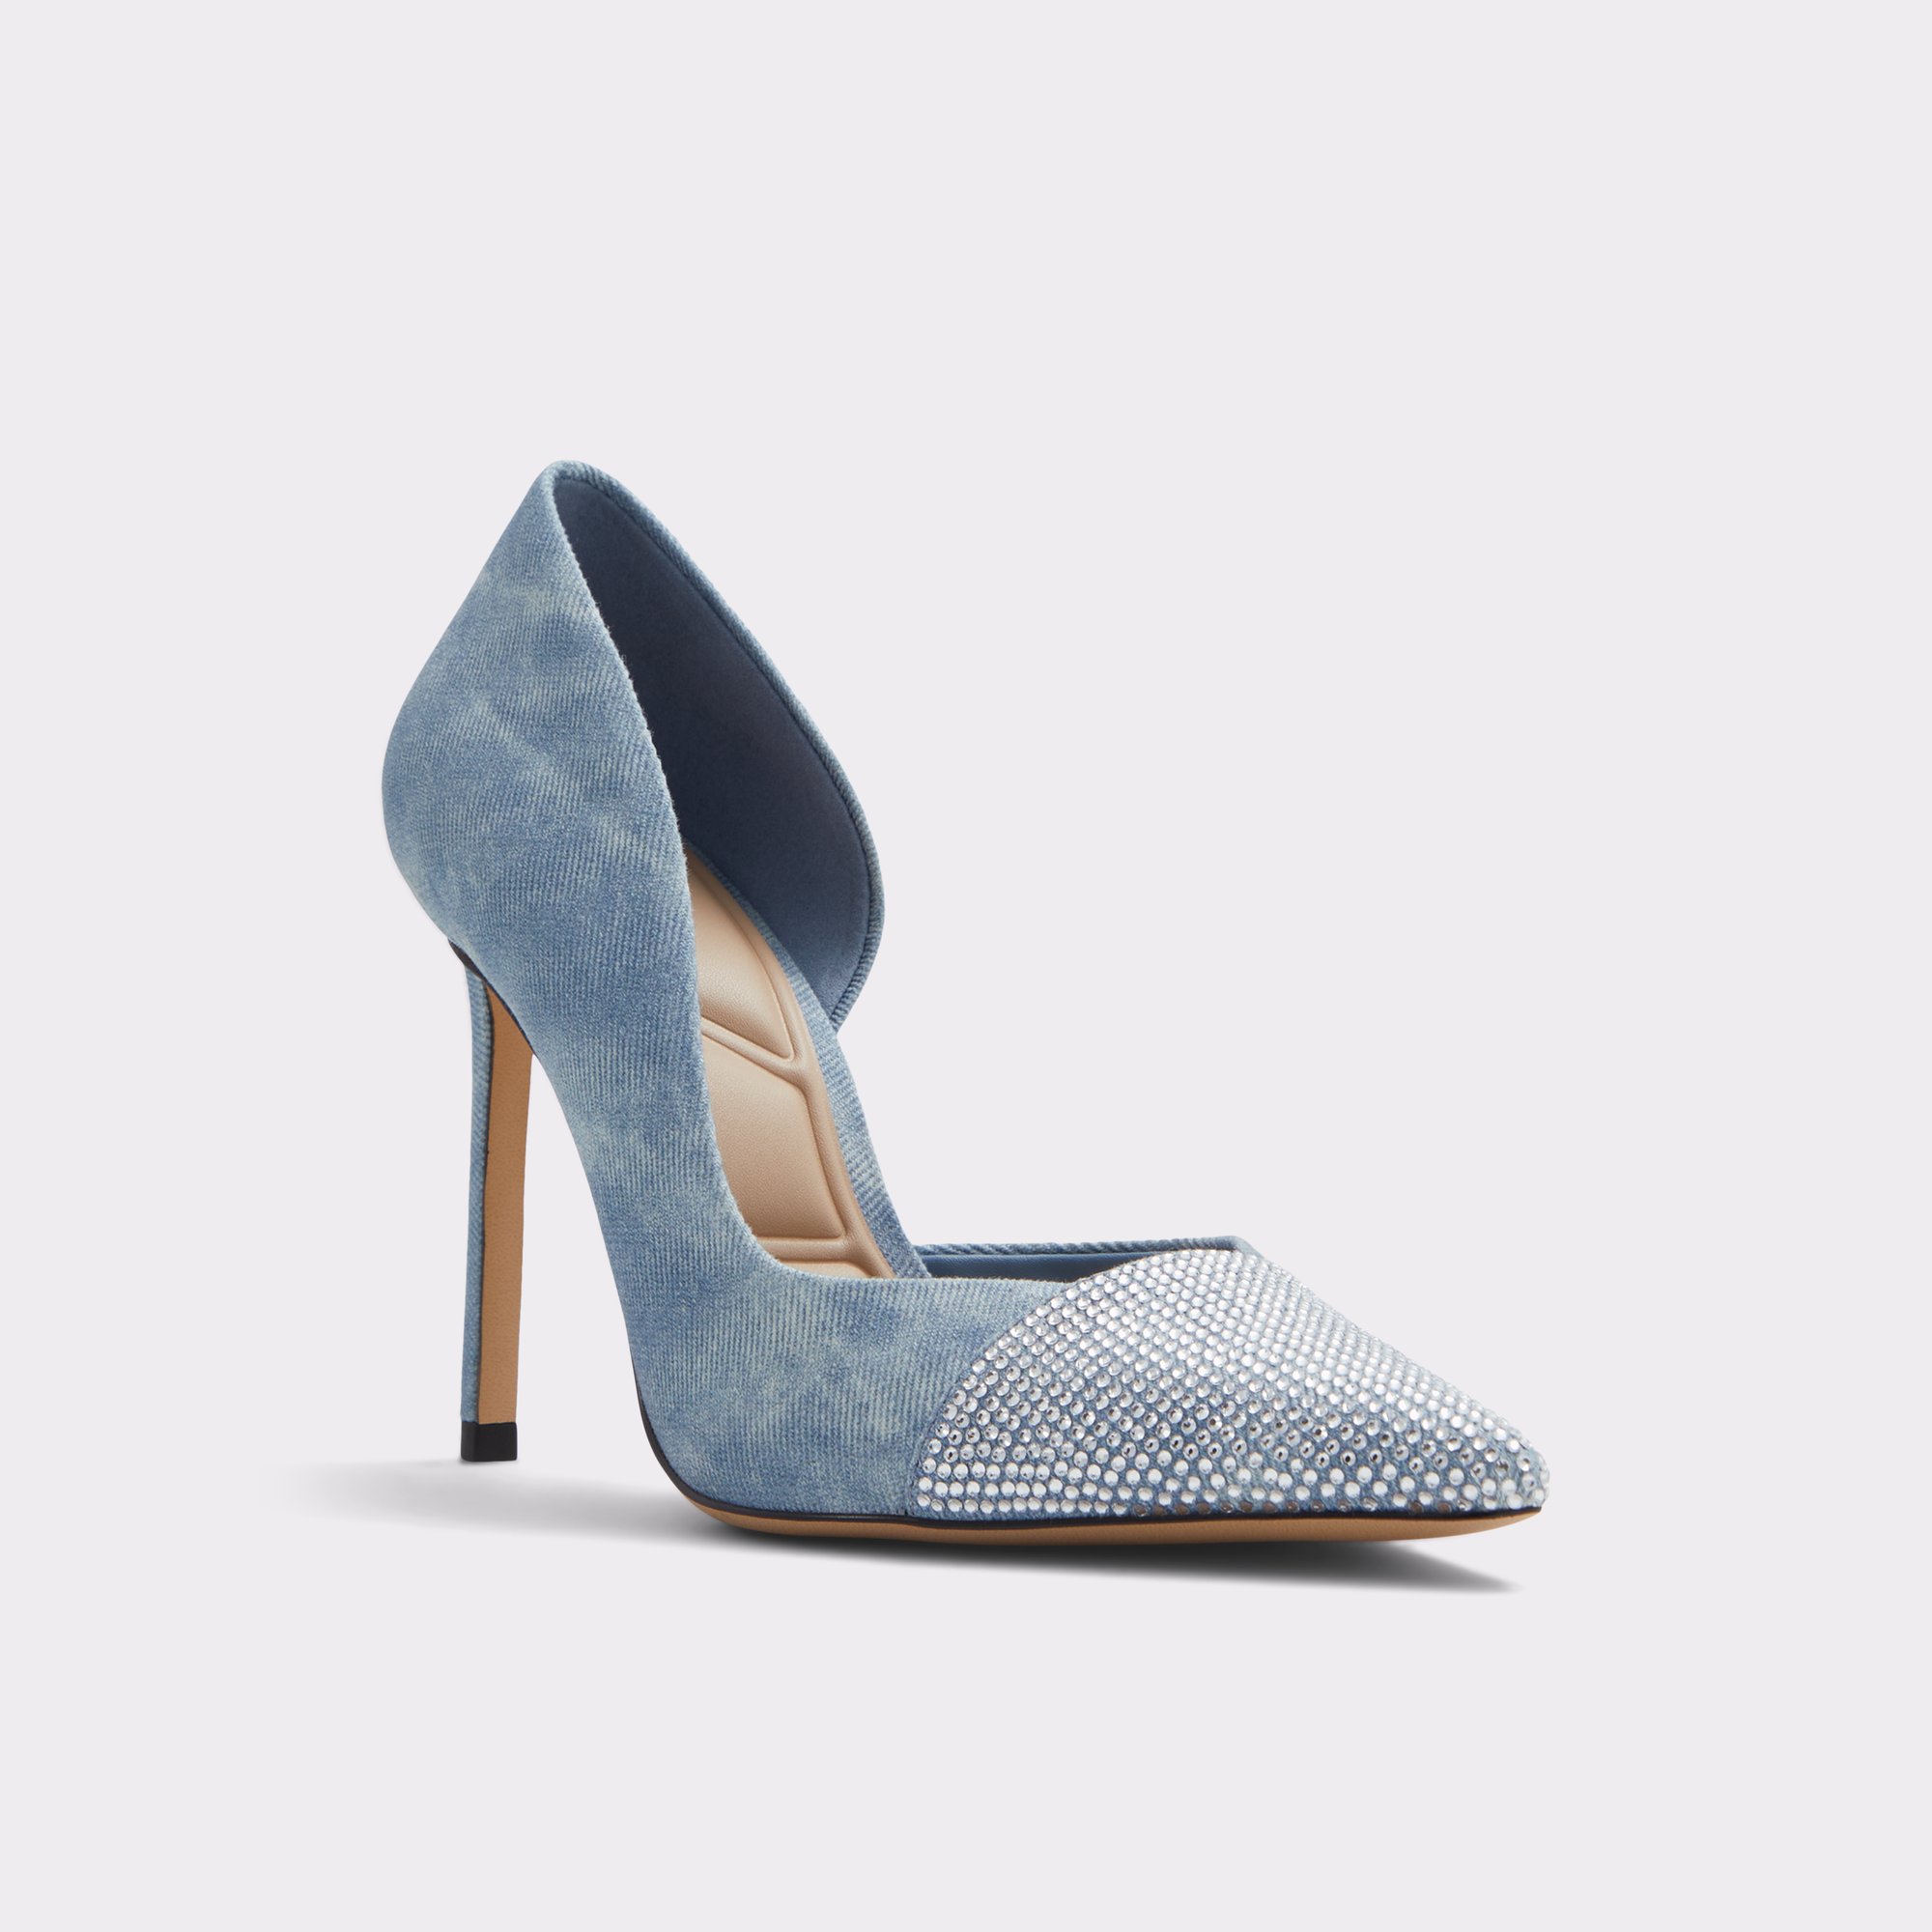 Mazy Medium Blue Women's Heels | ALDO Canada